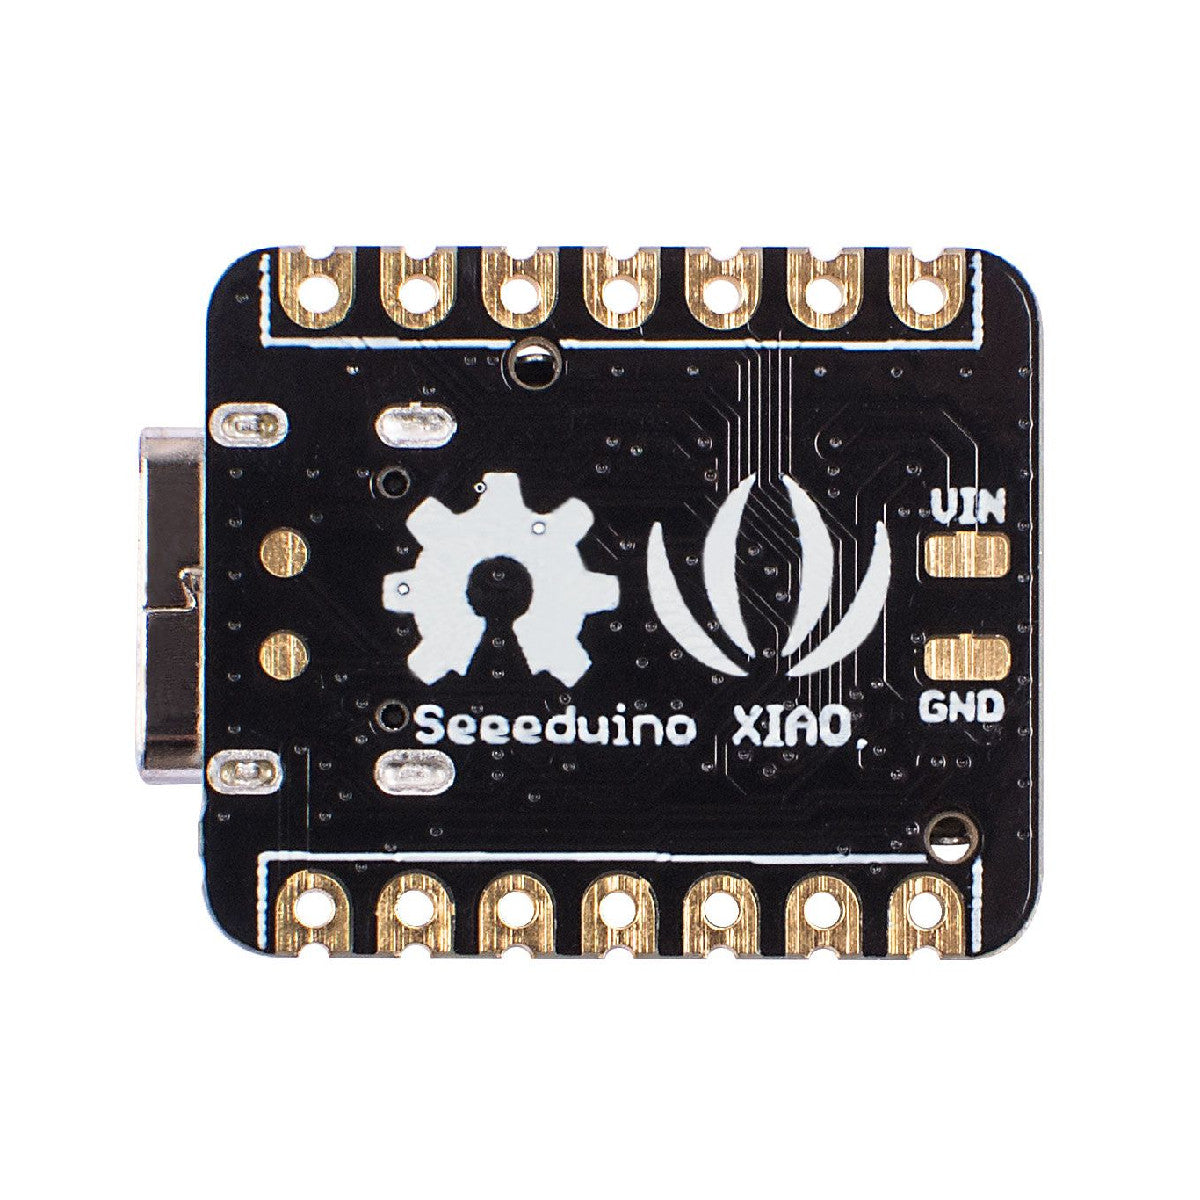 Seeeduino XIAO with SAMD21 Cortex M0+, Arduino Compatible Microcontroller